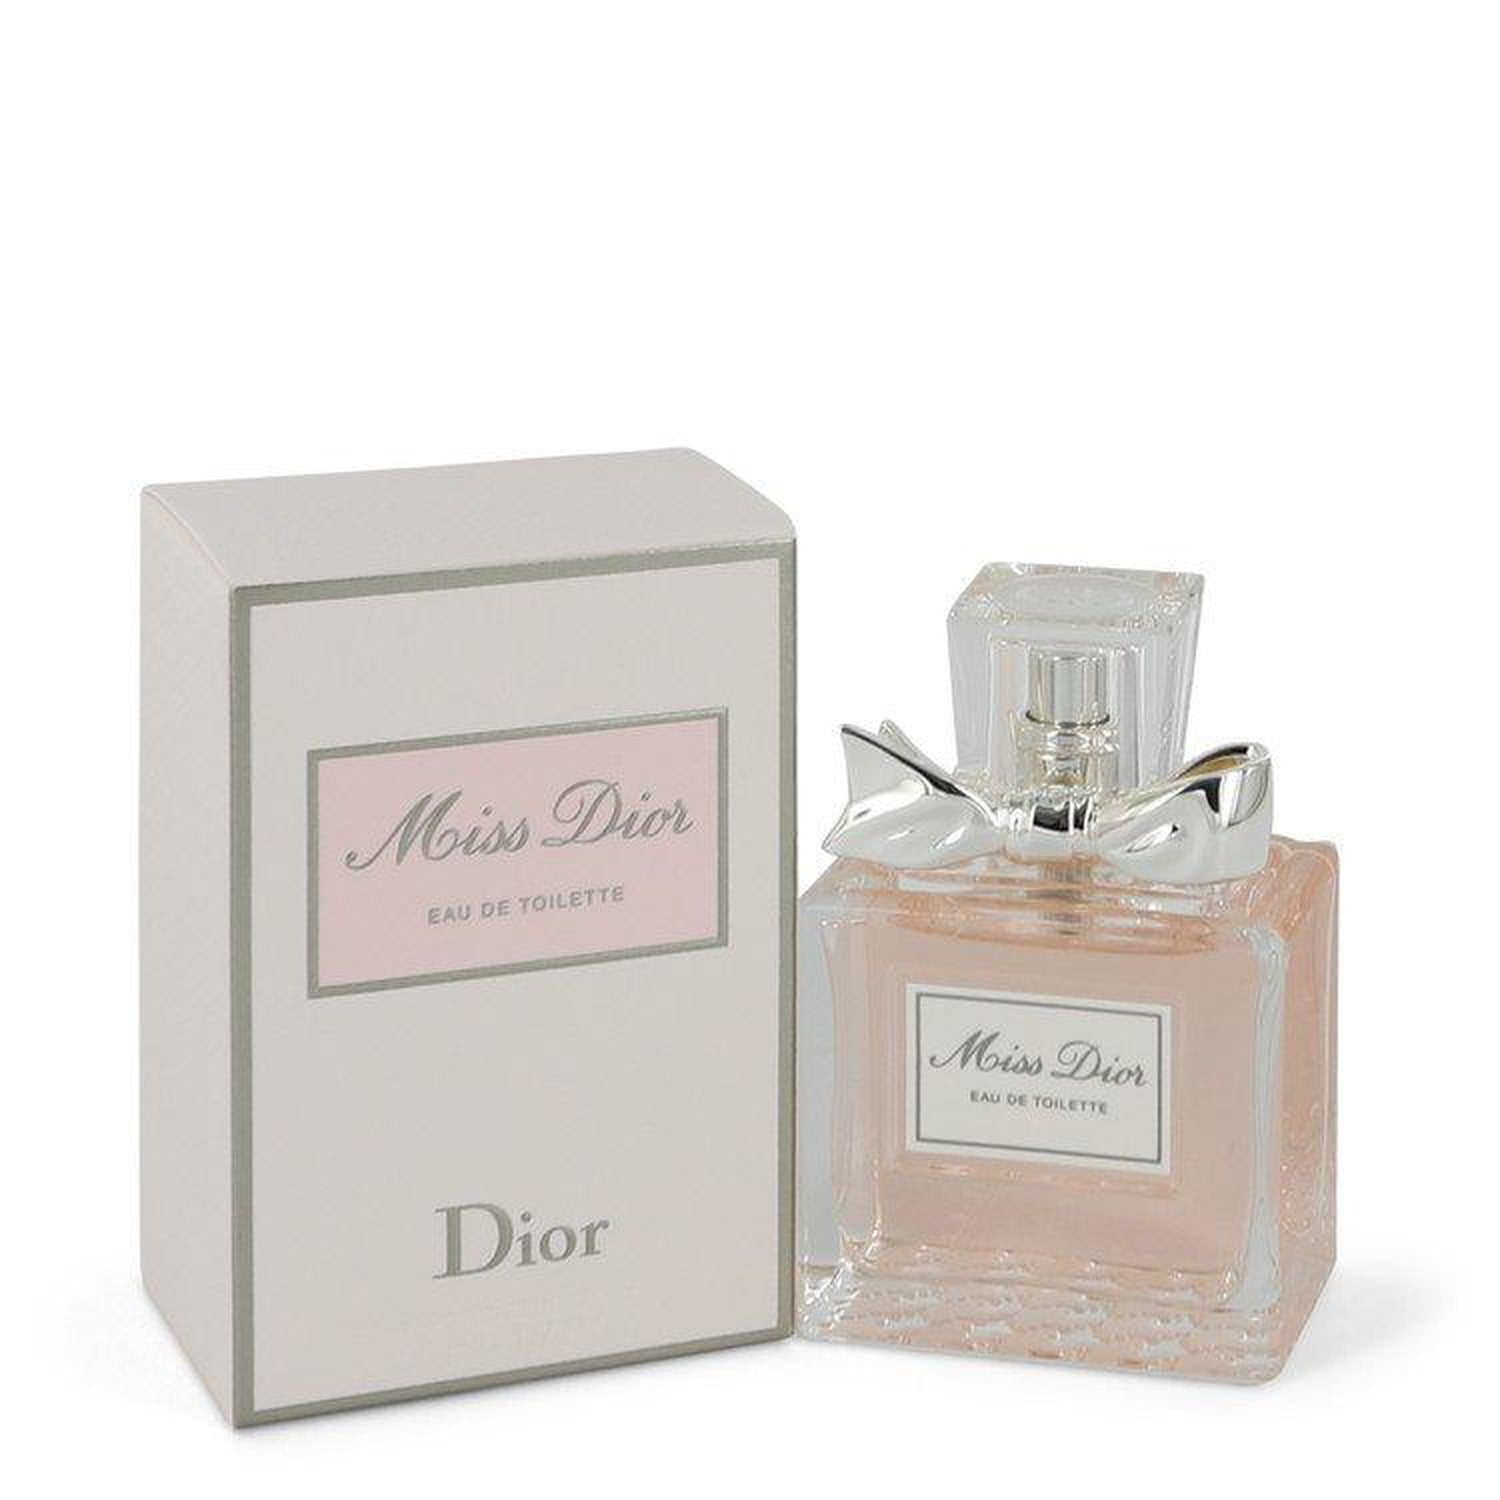 Dior Miss Dior Cherie 5ml Eau De Toilette Miniature Perfume Bottle  Perfume  Shop Bangladesh  Buy Best Perfumes and Fragrances